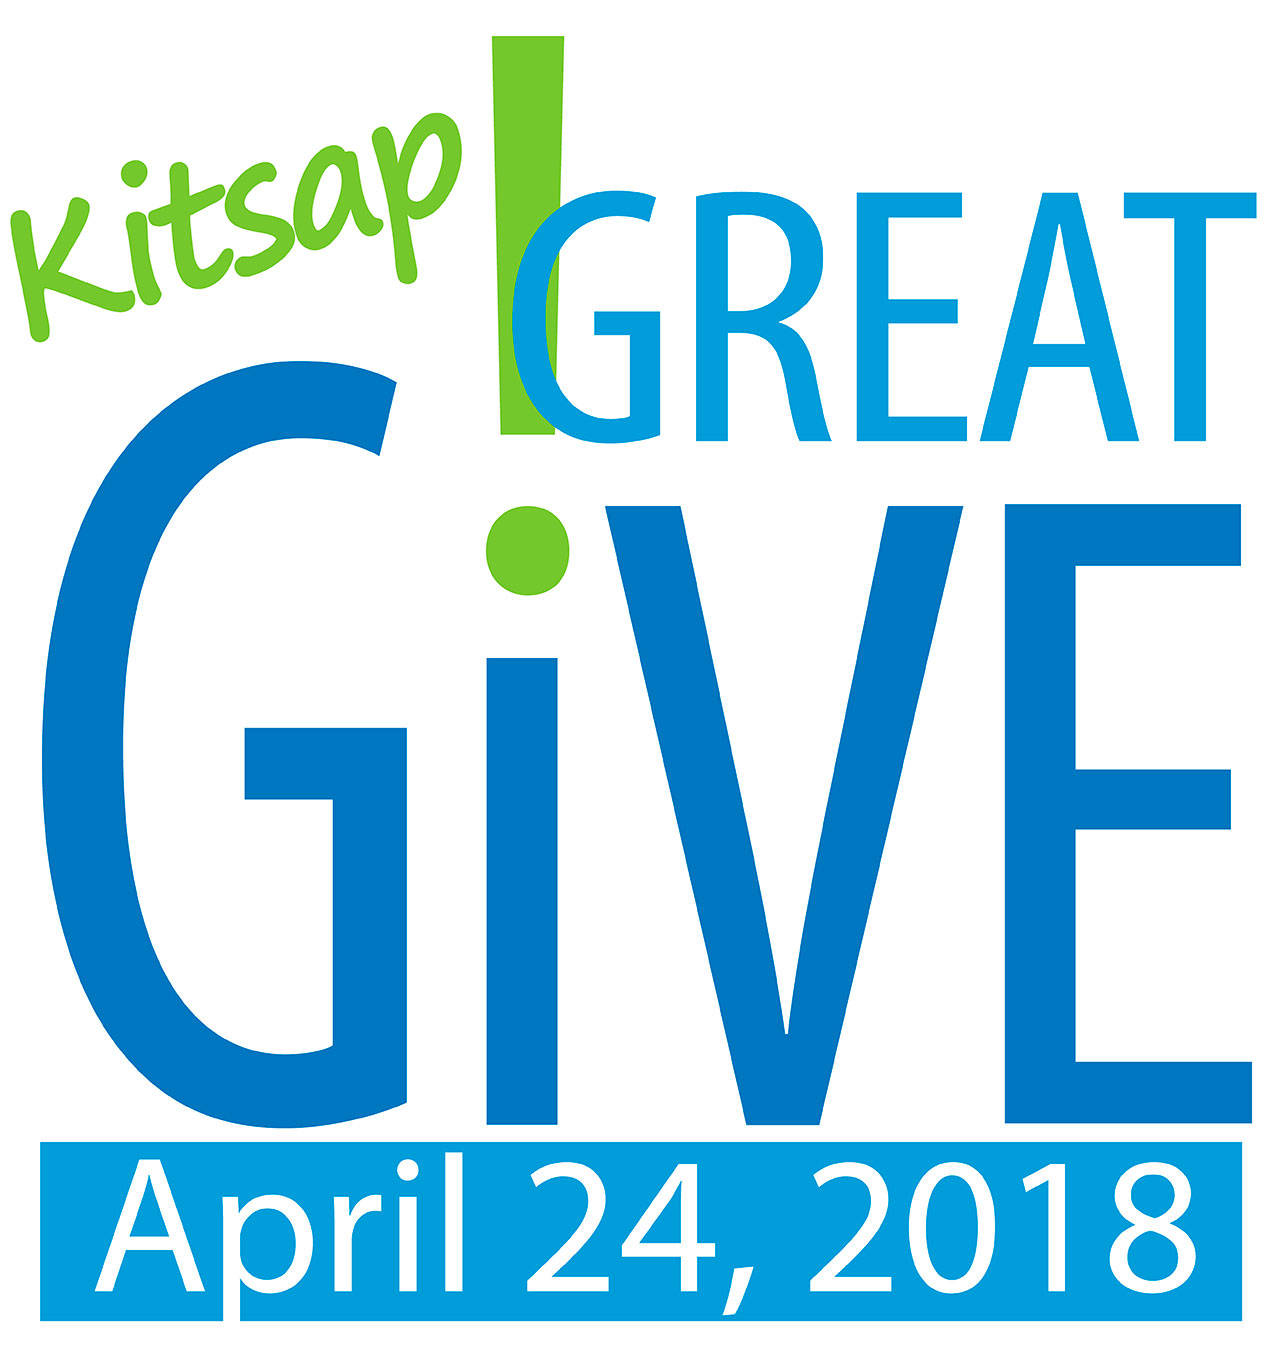 Kitsap Great Give raises over $1.4 million for 314 local non profits